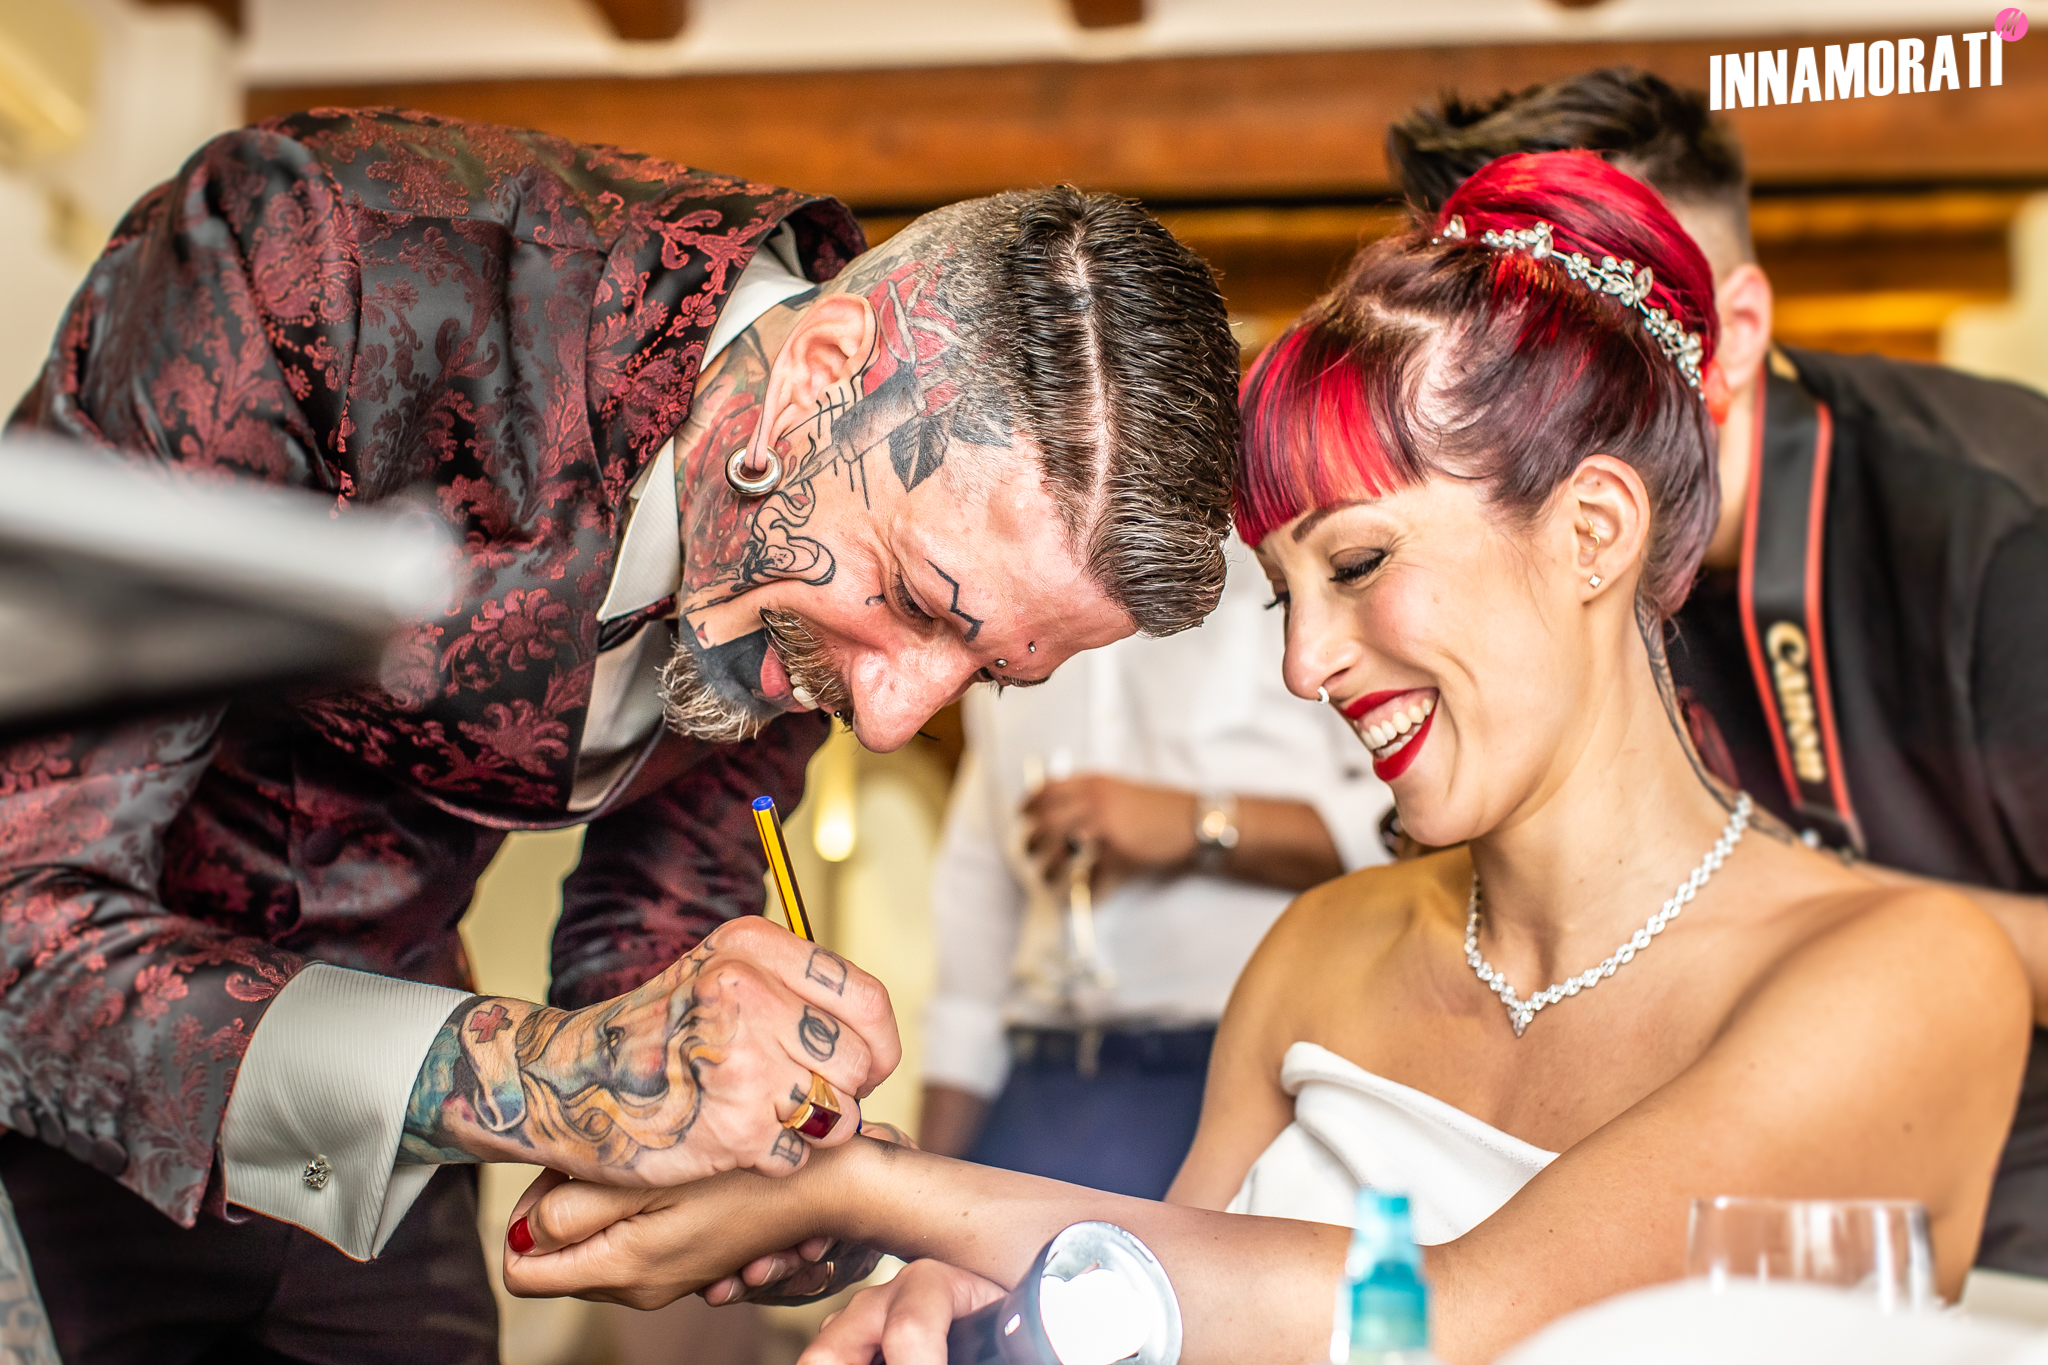 Cumignano sul naviglio wedding tatoo By Innamorati